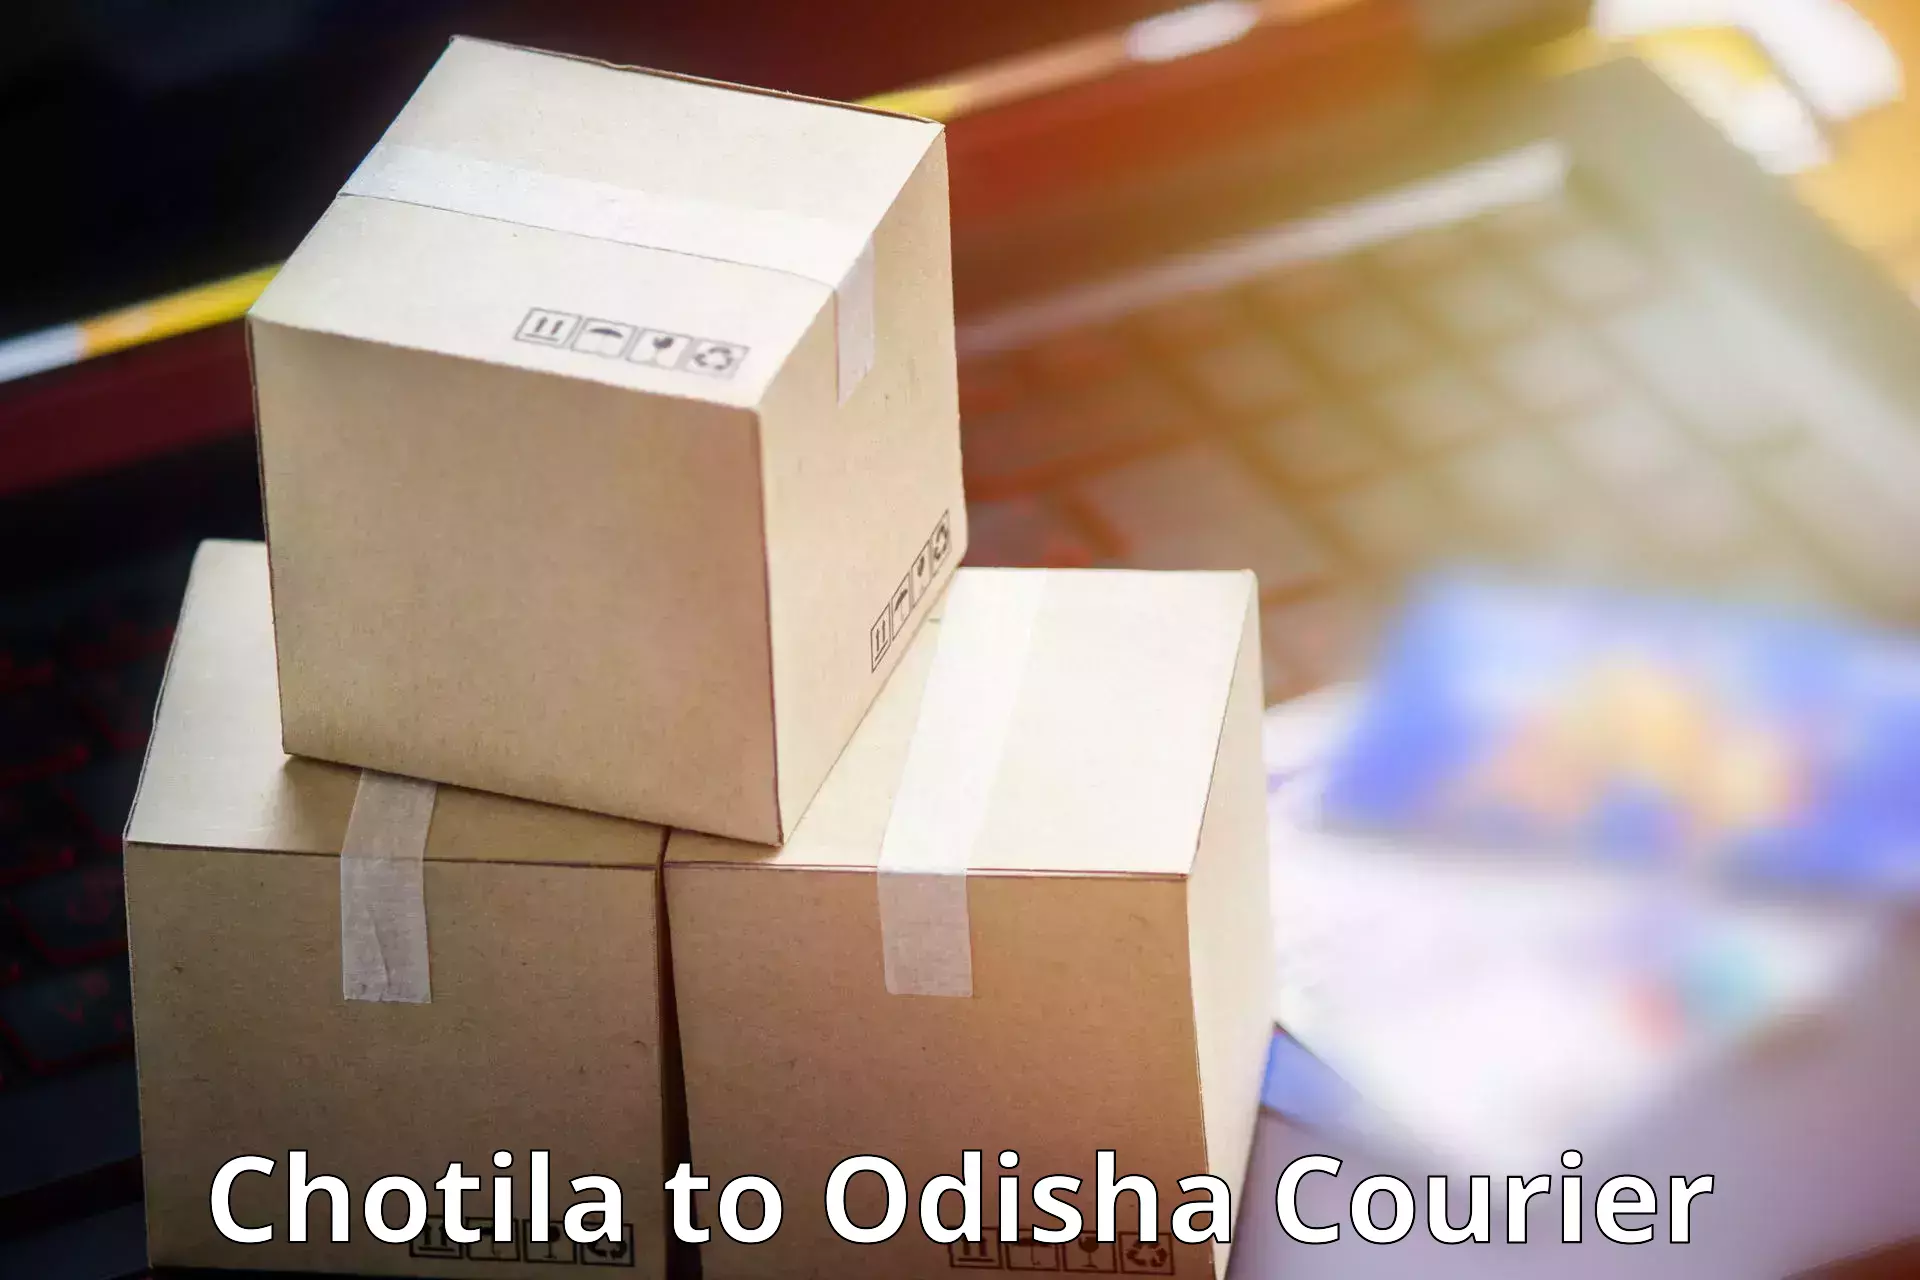 Courier service partnerships Chotila to Paradip Port